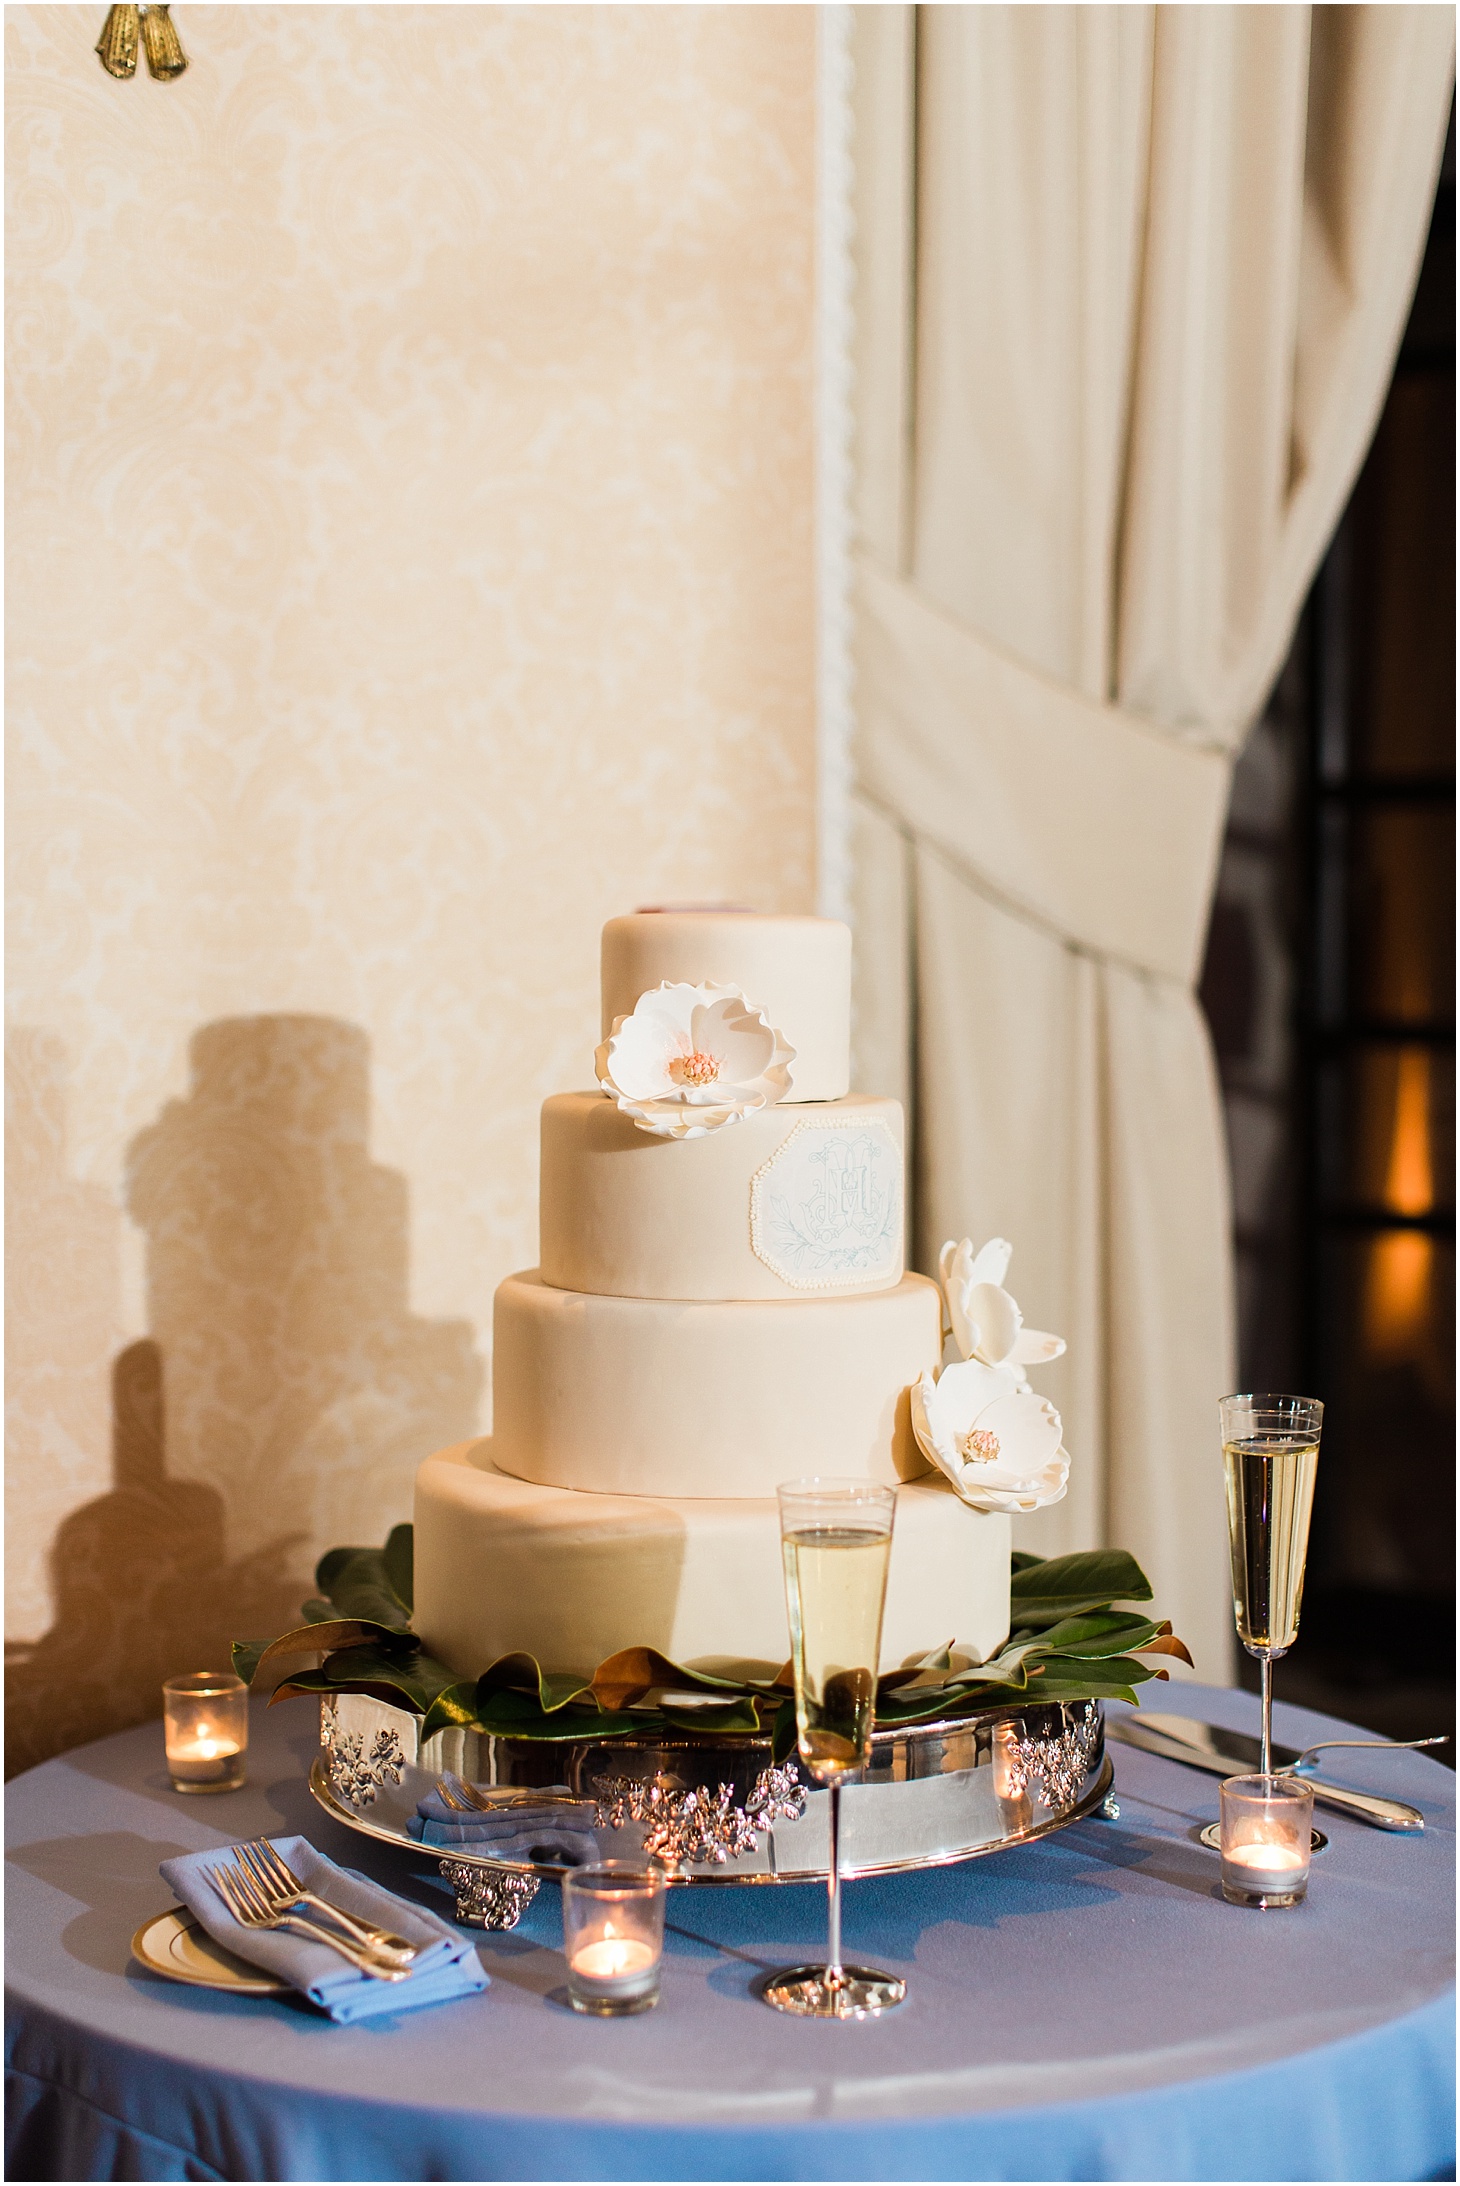 Wedding Cake at the St. Regis Washington, DC | Southern Black Tie Wedding in Dusty Blue and Ivory | Sarah Bradshaw Photography